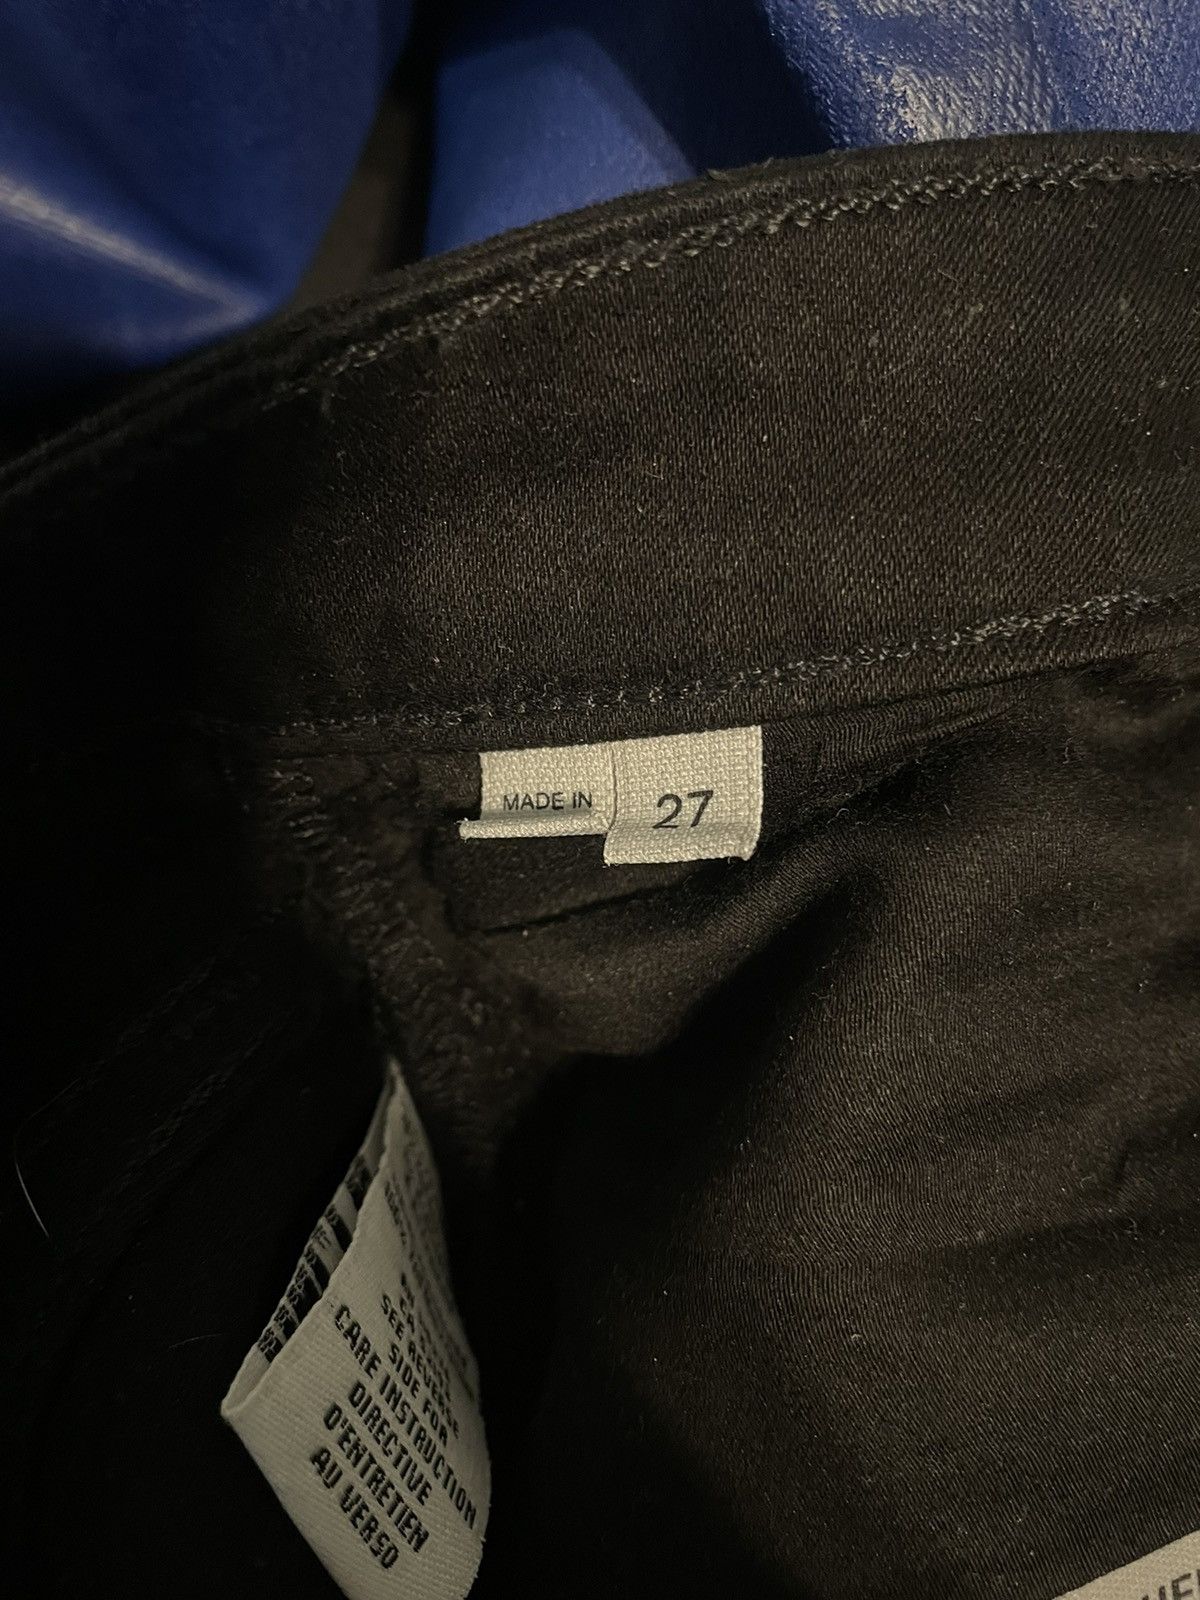 Helmut Lang Helmut Lang Waxed Jeans Size 27" / US 4 / IT 40 - 7 Thumbnail